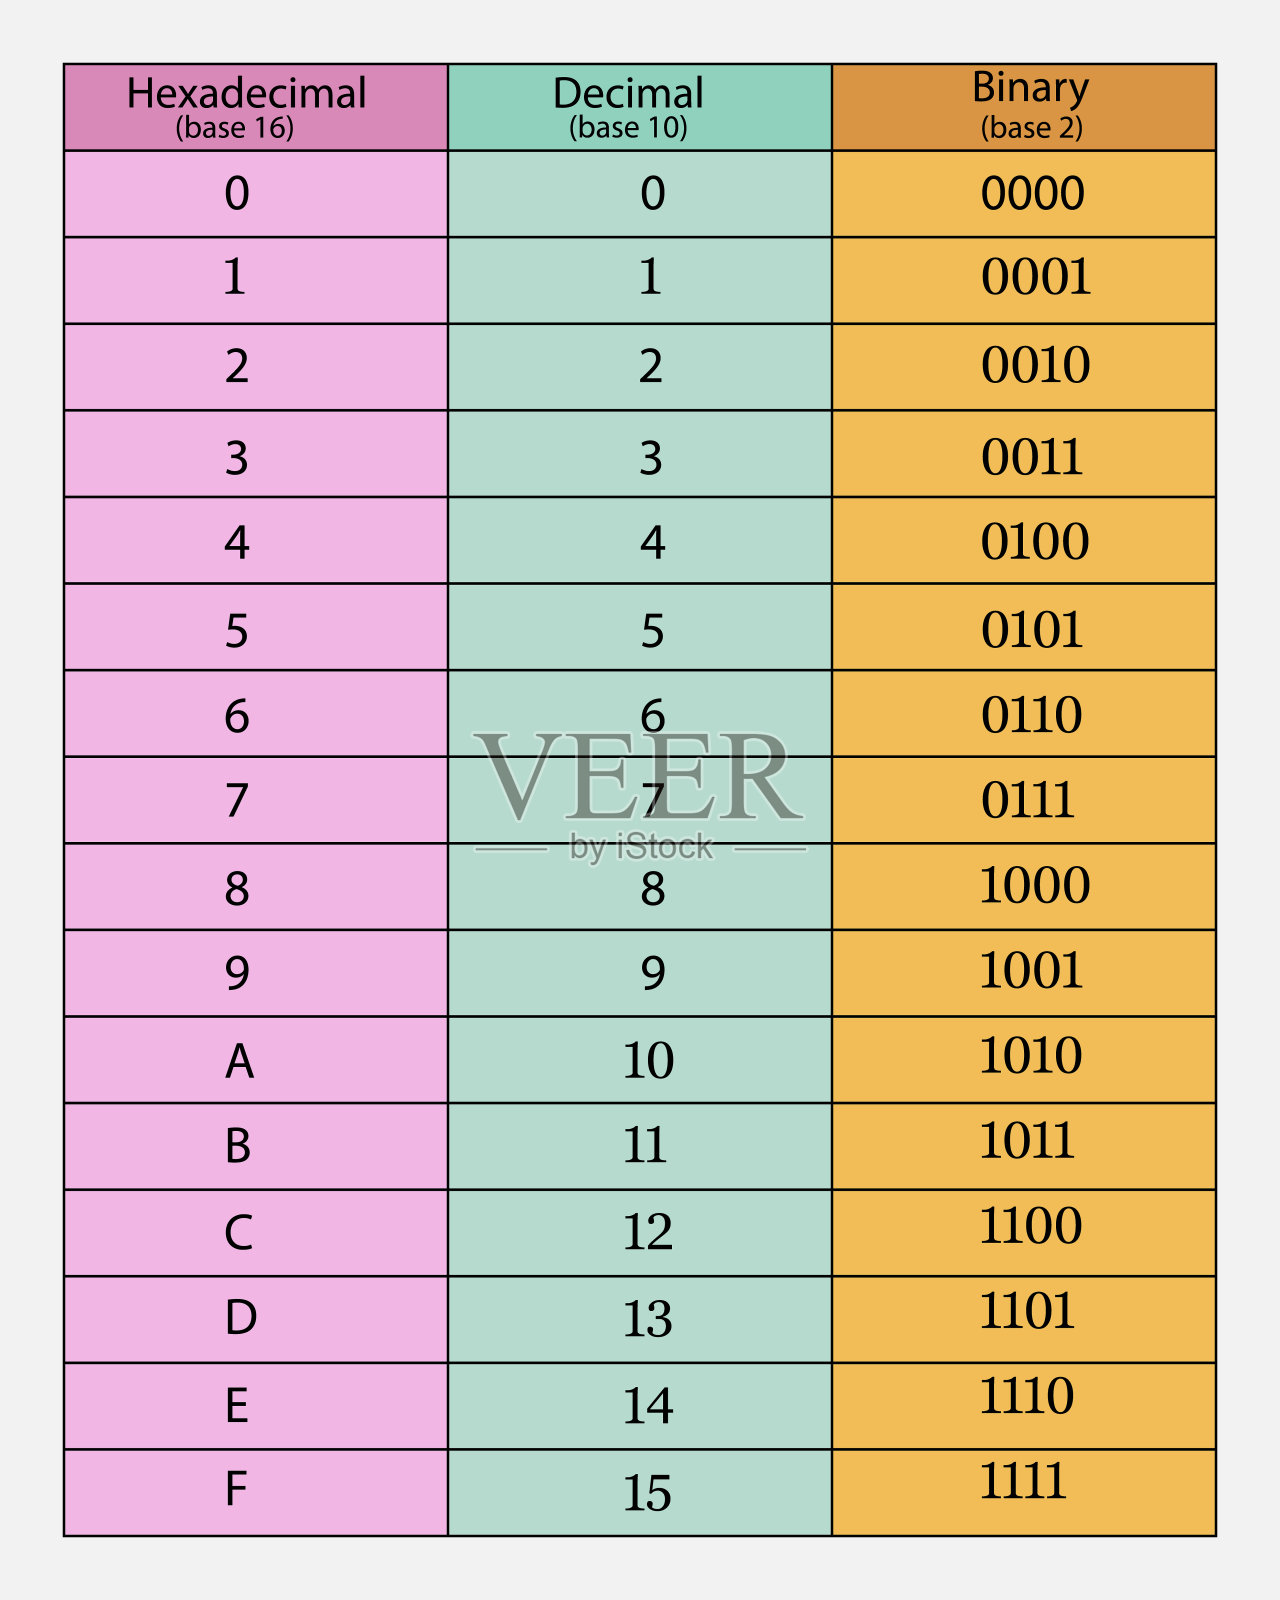 (c语言——递归）输入一个十进制整数，将其转化为二进制数输出 - 忆云竹